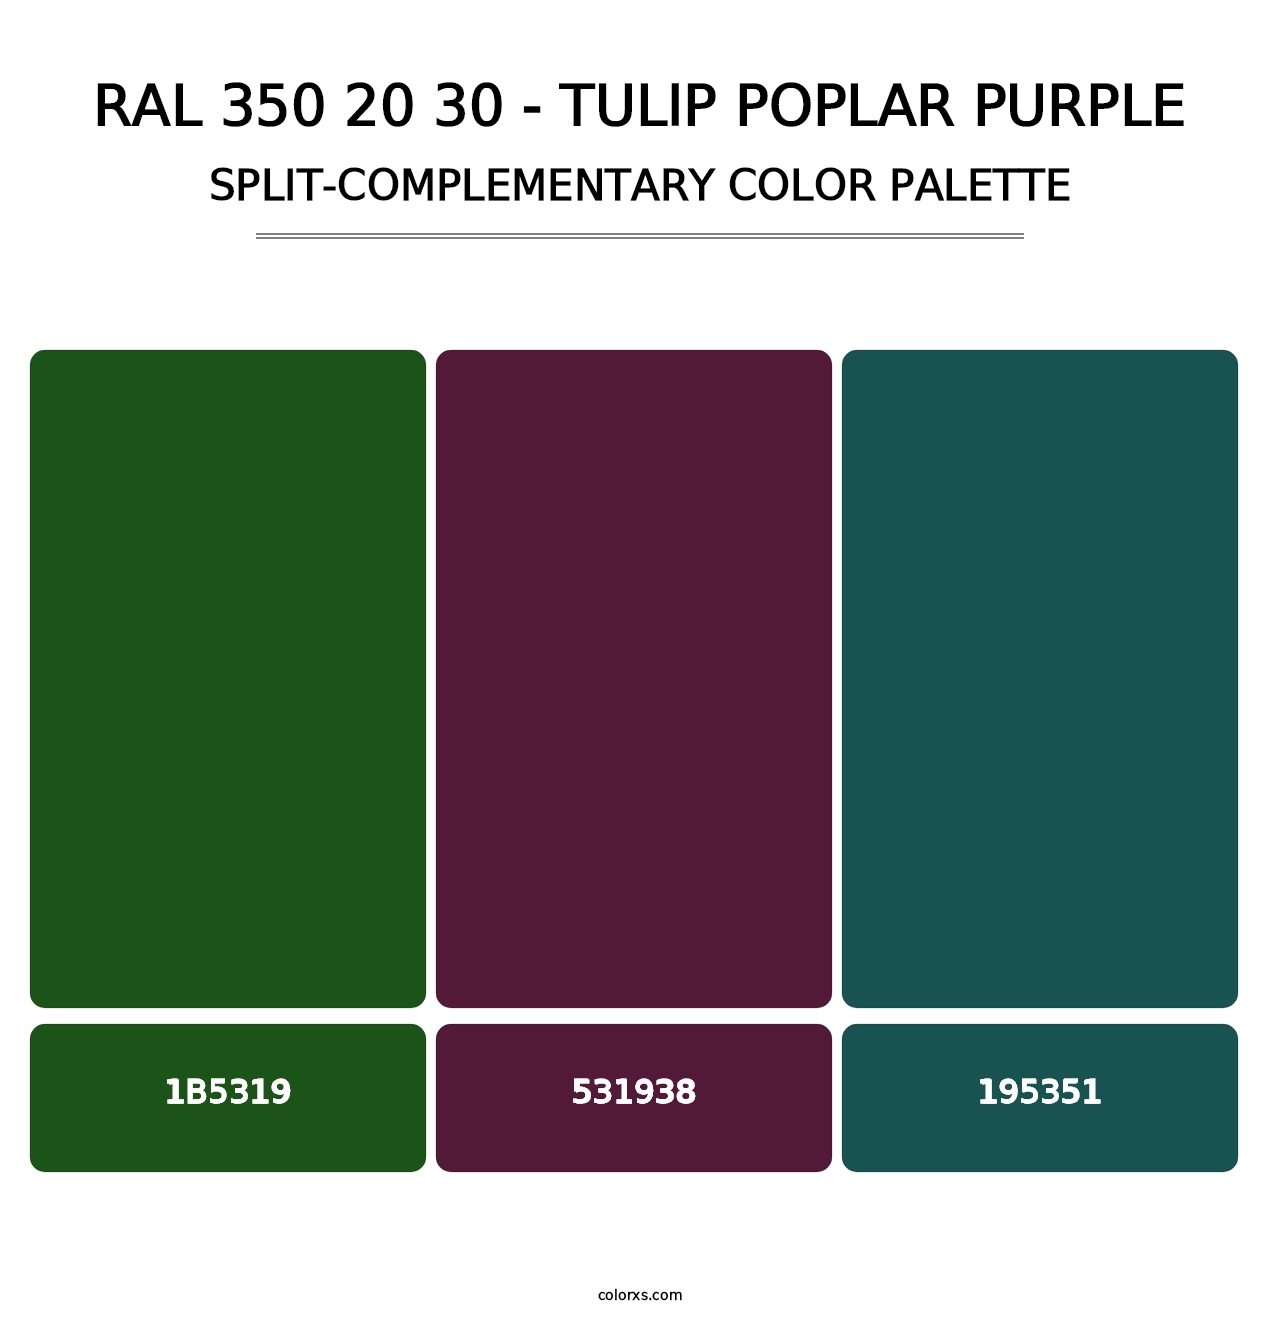 RAL 350 20 30 - Tulip Poplar Purple - Split-Complementary Color Palette